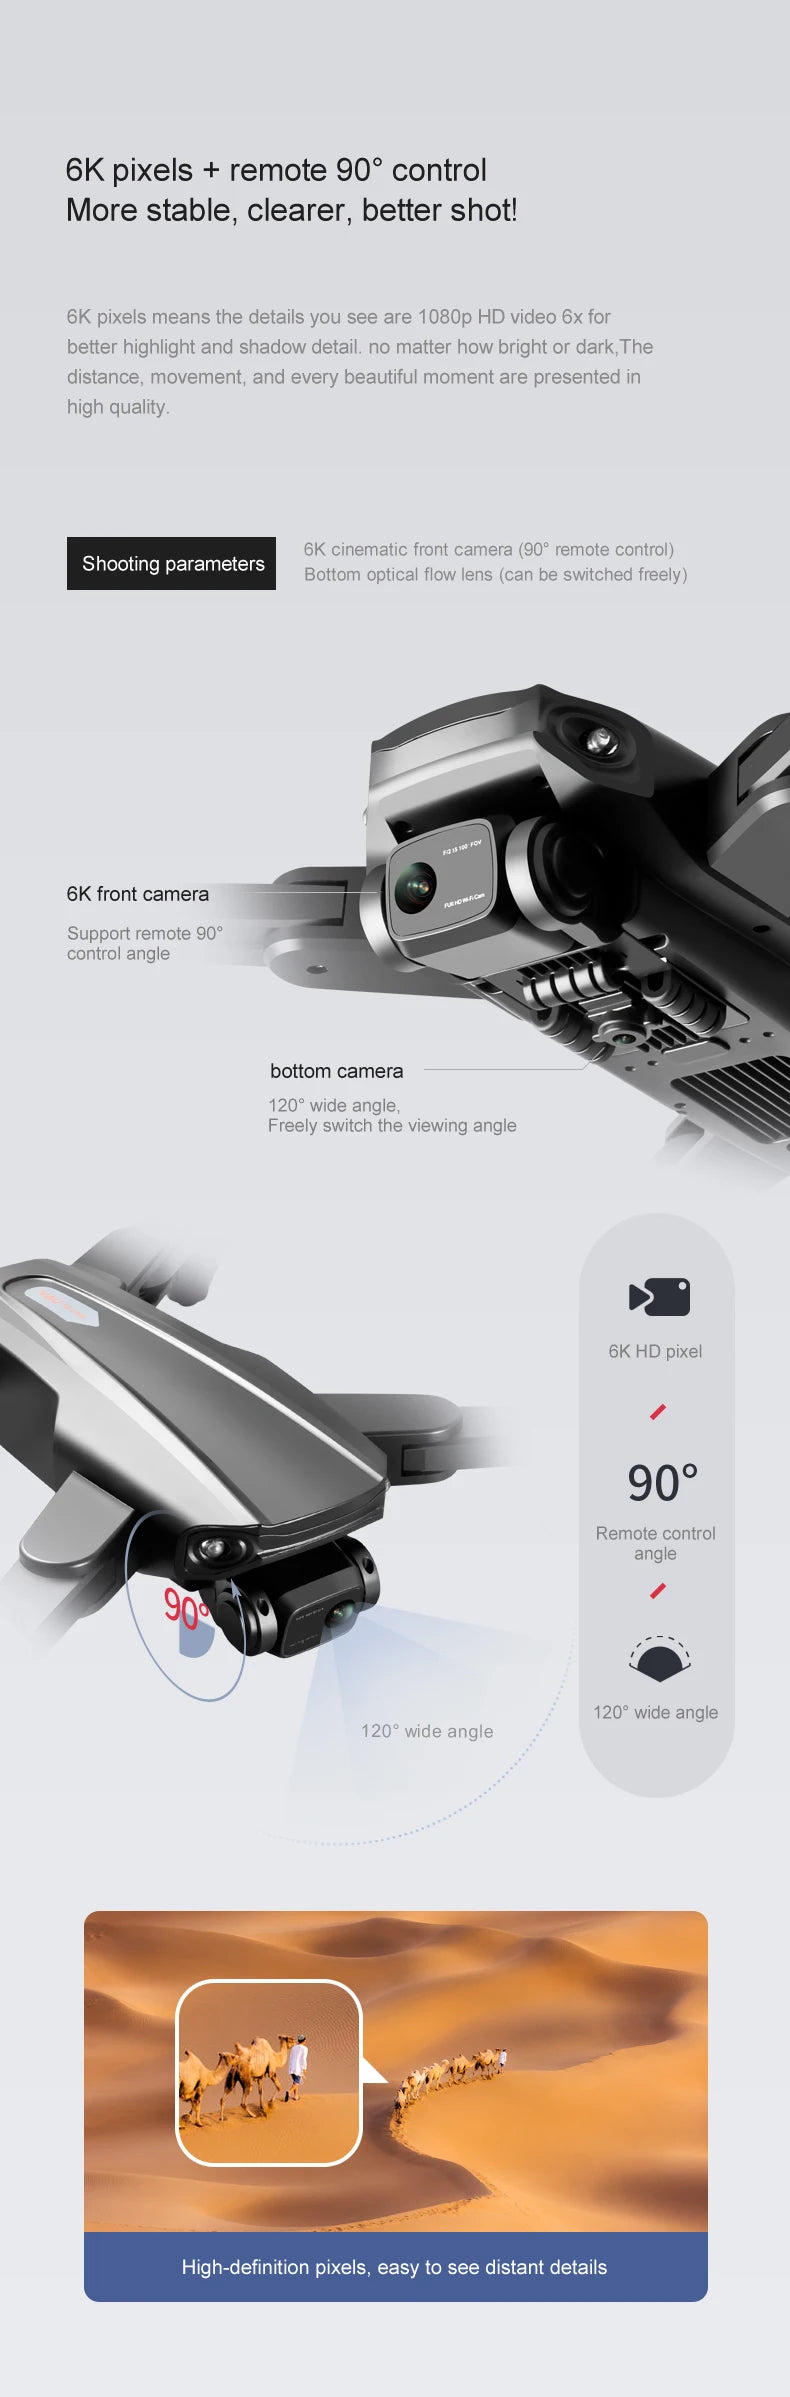 R20 Drone, 4k uhd video capture resolution : 6k 